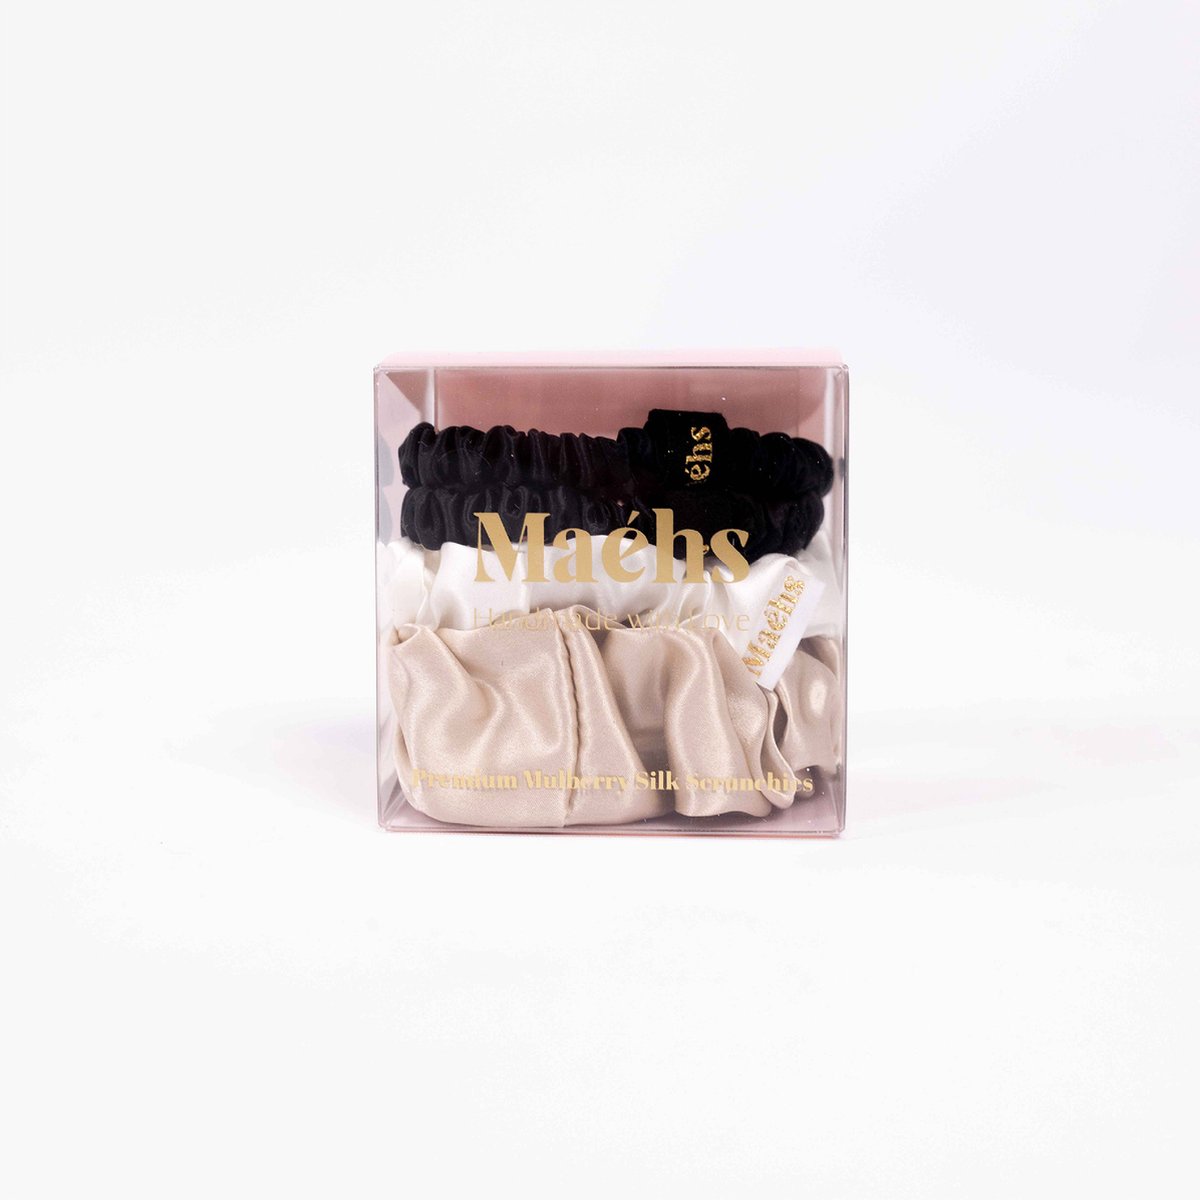 Maéhs Paris Set van 4 mixed scrunchies 2x small medium, large haaraccessoires - haarelastiekjes - 100% moerbei zijde, kwaliteit 22 Momme - Kleur Black, Ivory, Champagne - cadeautip